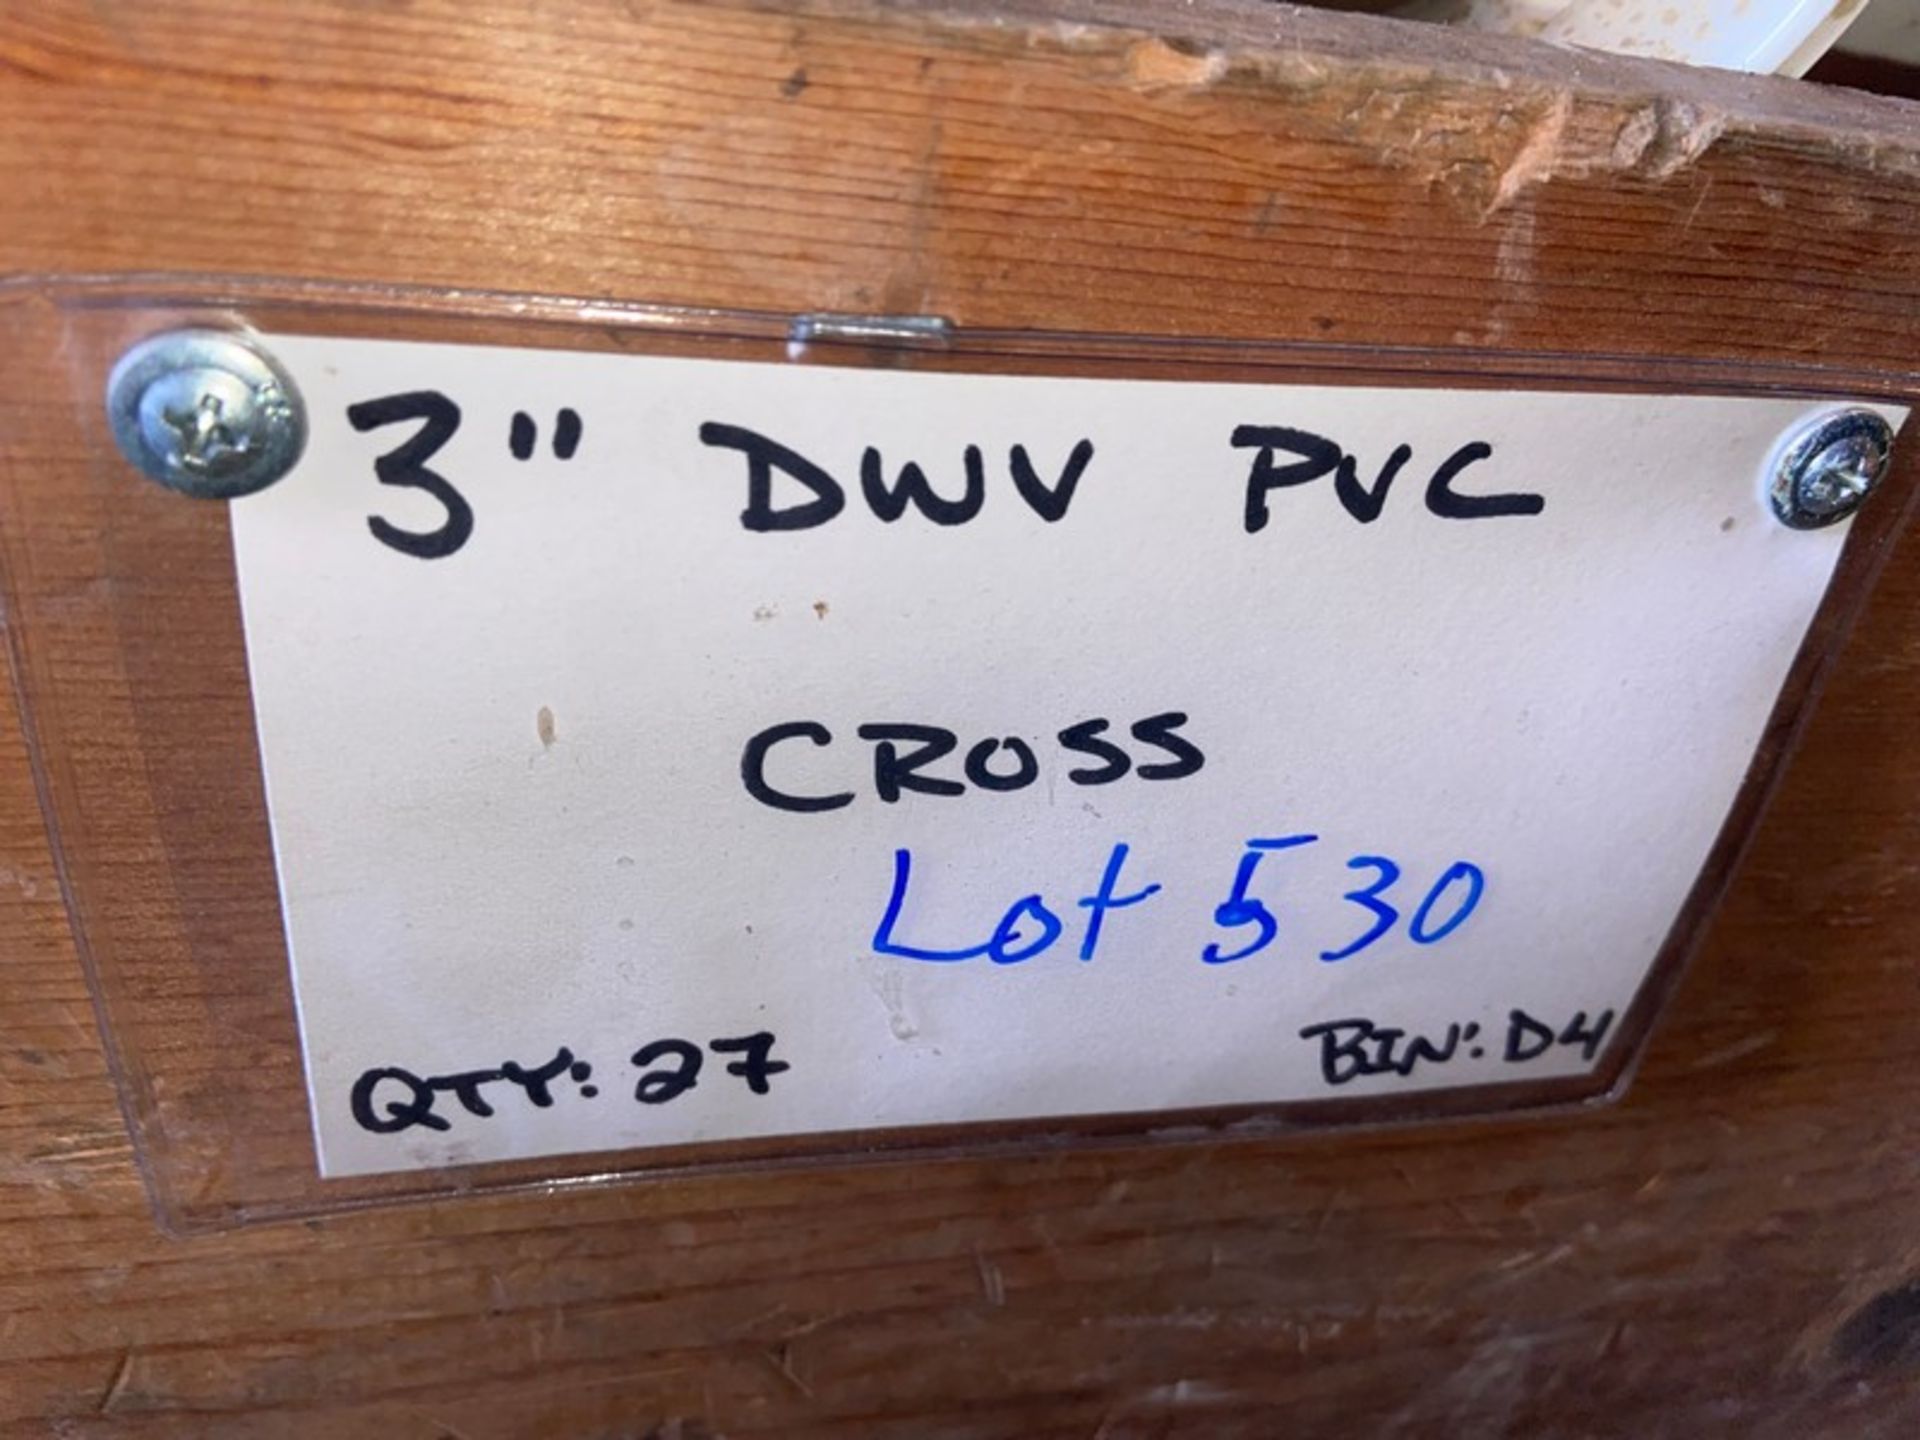 (27) 3” DWV PVC CROSS (Bin:D4) (LOCATED IN MONROEVILLE, PA) - Bild 4 aus 4